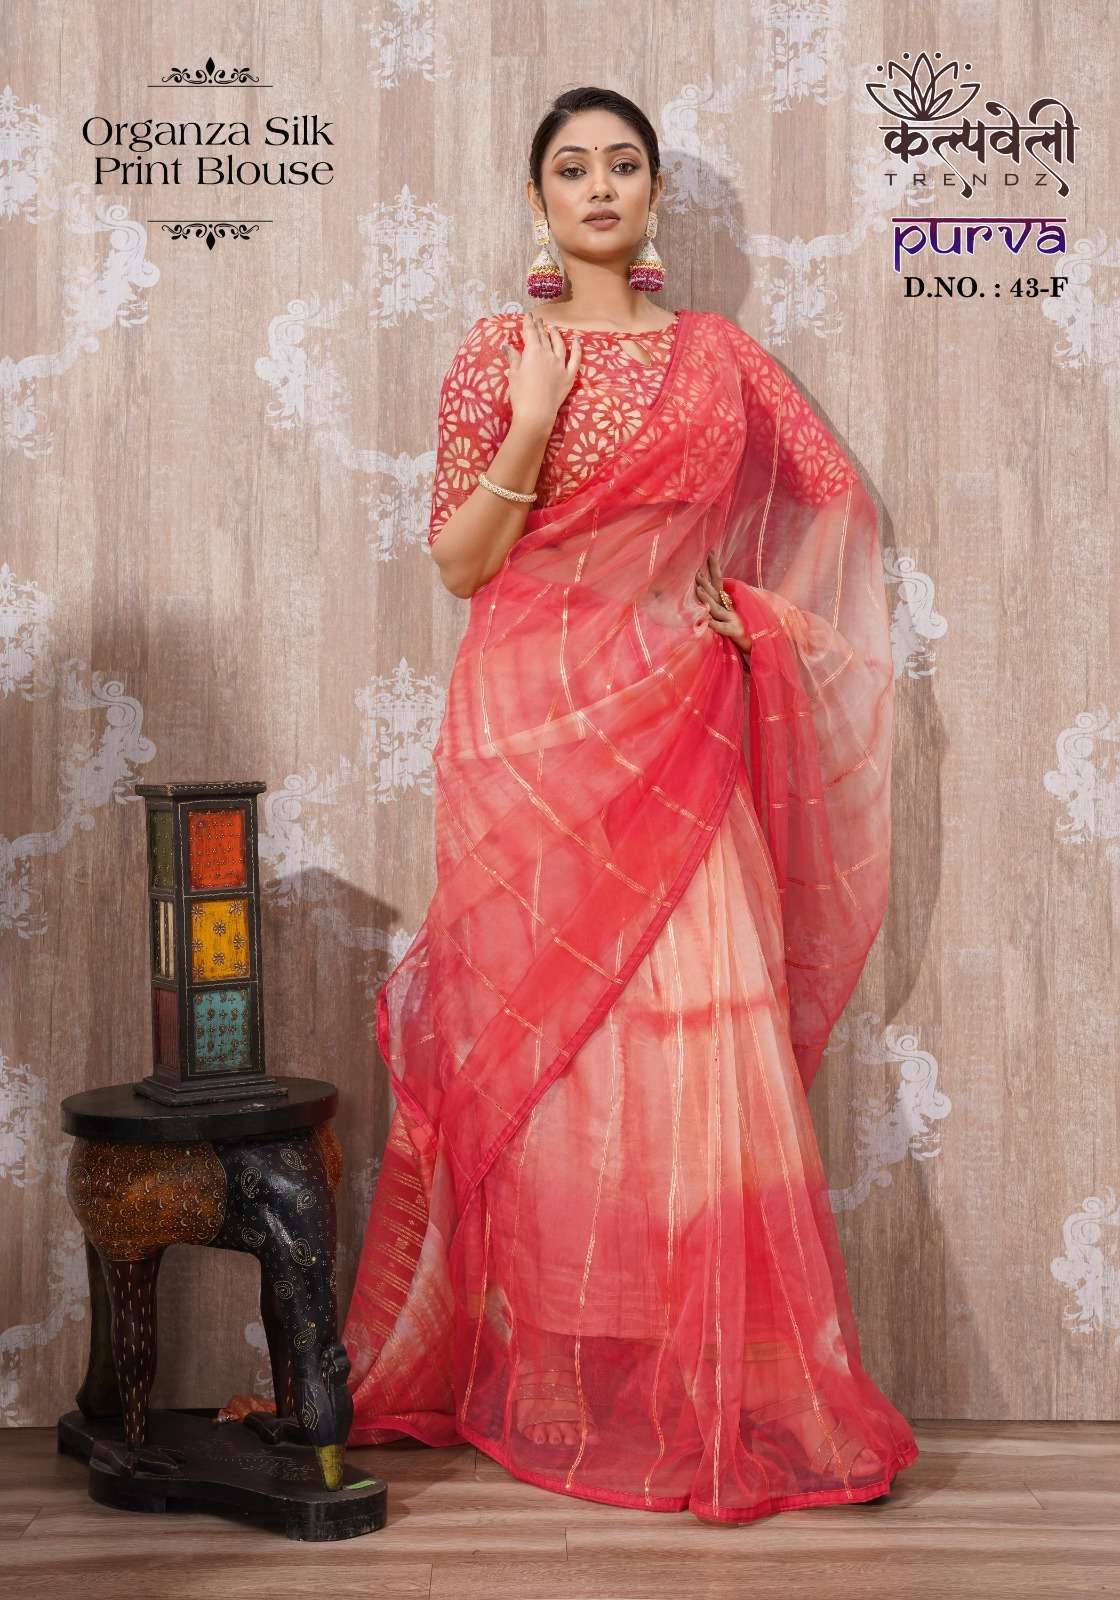 kalpvalley trendz present purva 42-43-59 organza silk fancy saree catalog